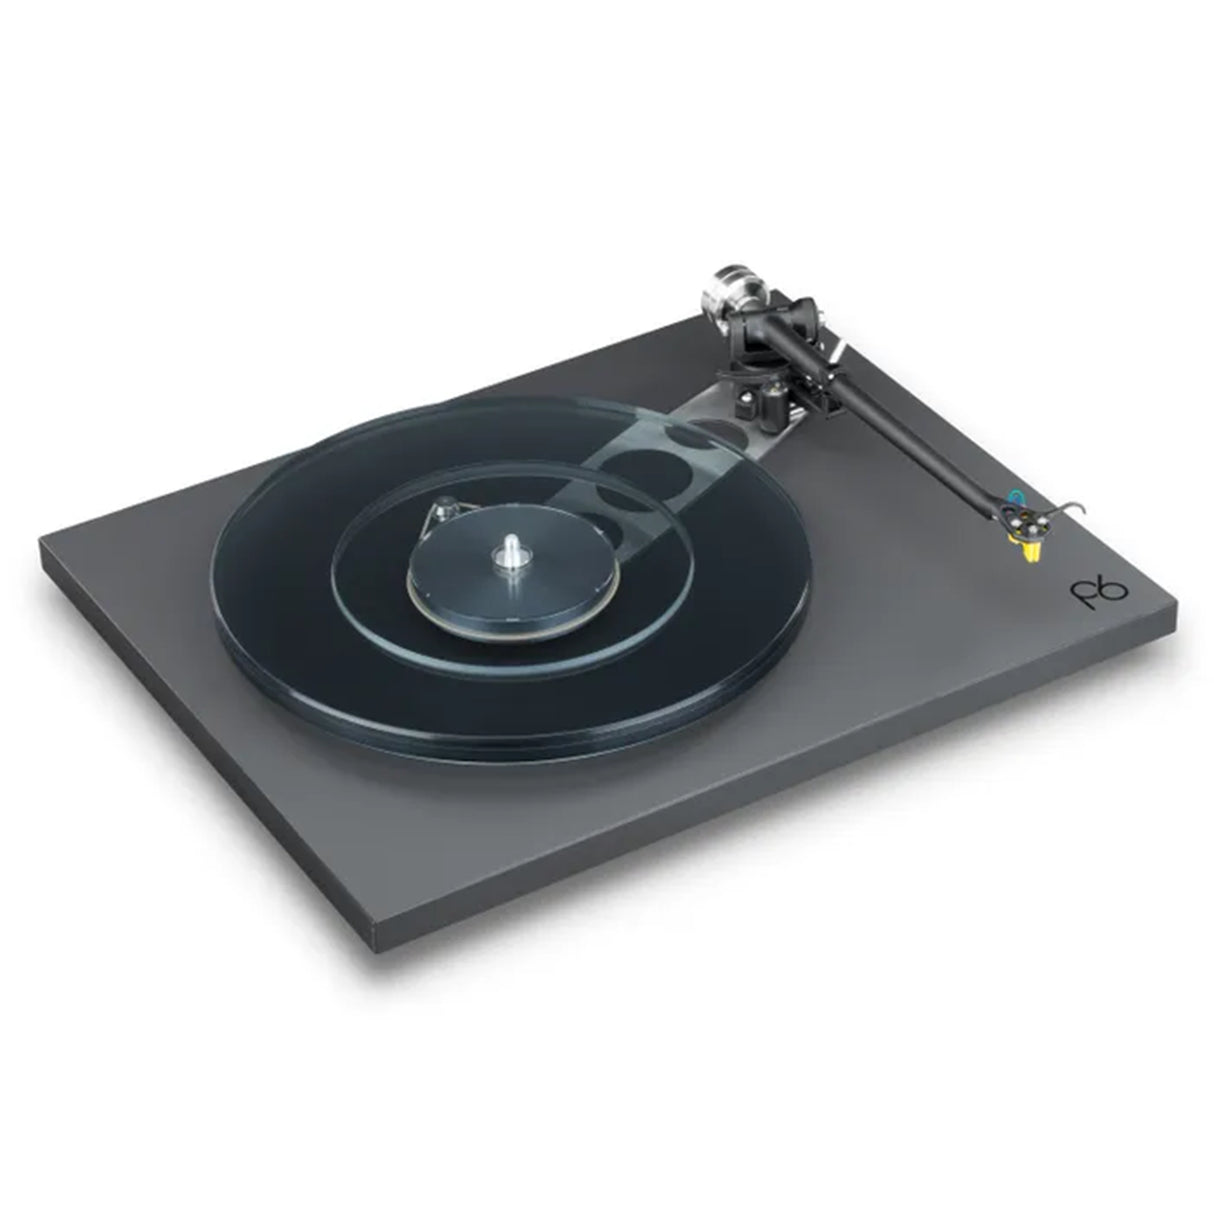 Rega Planar 6 Turntable with Ania MC Cartridge (Black Colour)